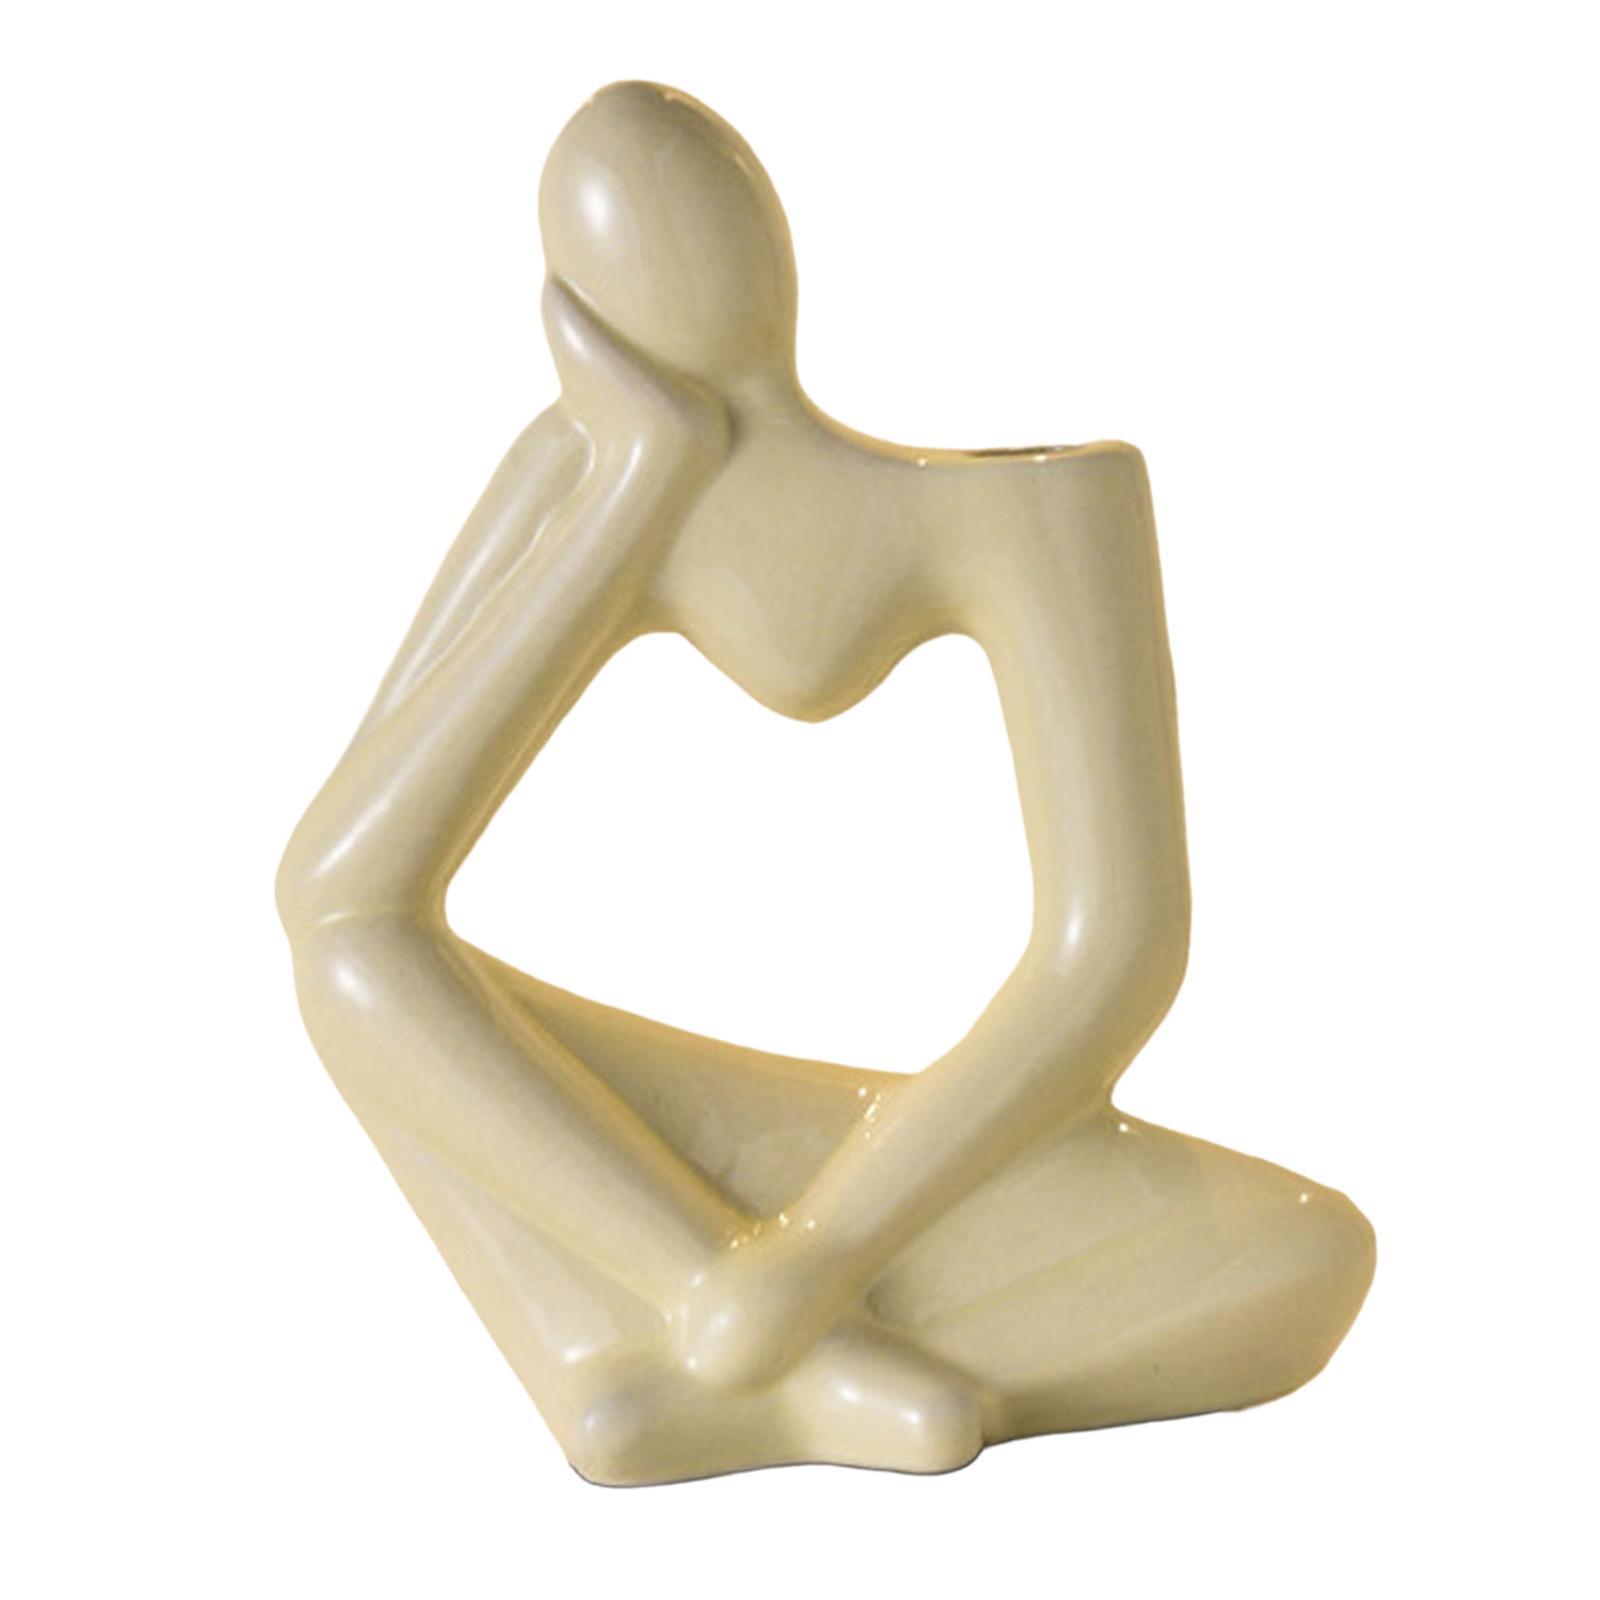 Thinker Statue Ceramic Vase Figurine Craft for Home Living Room Cabinet